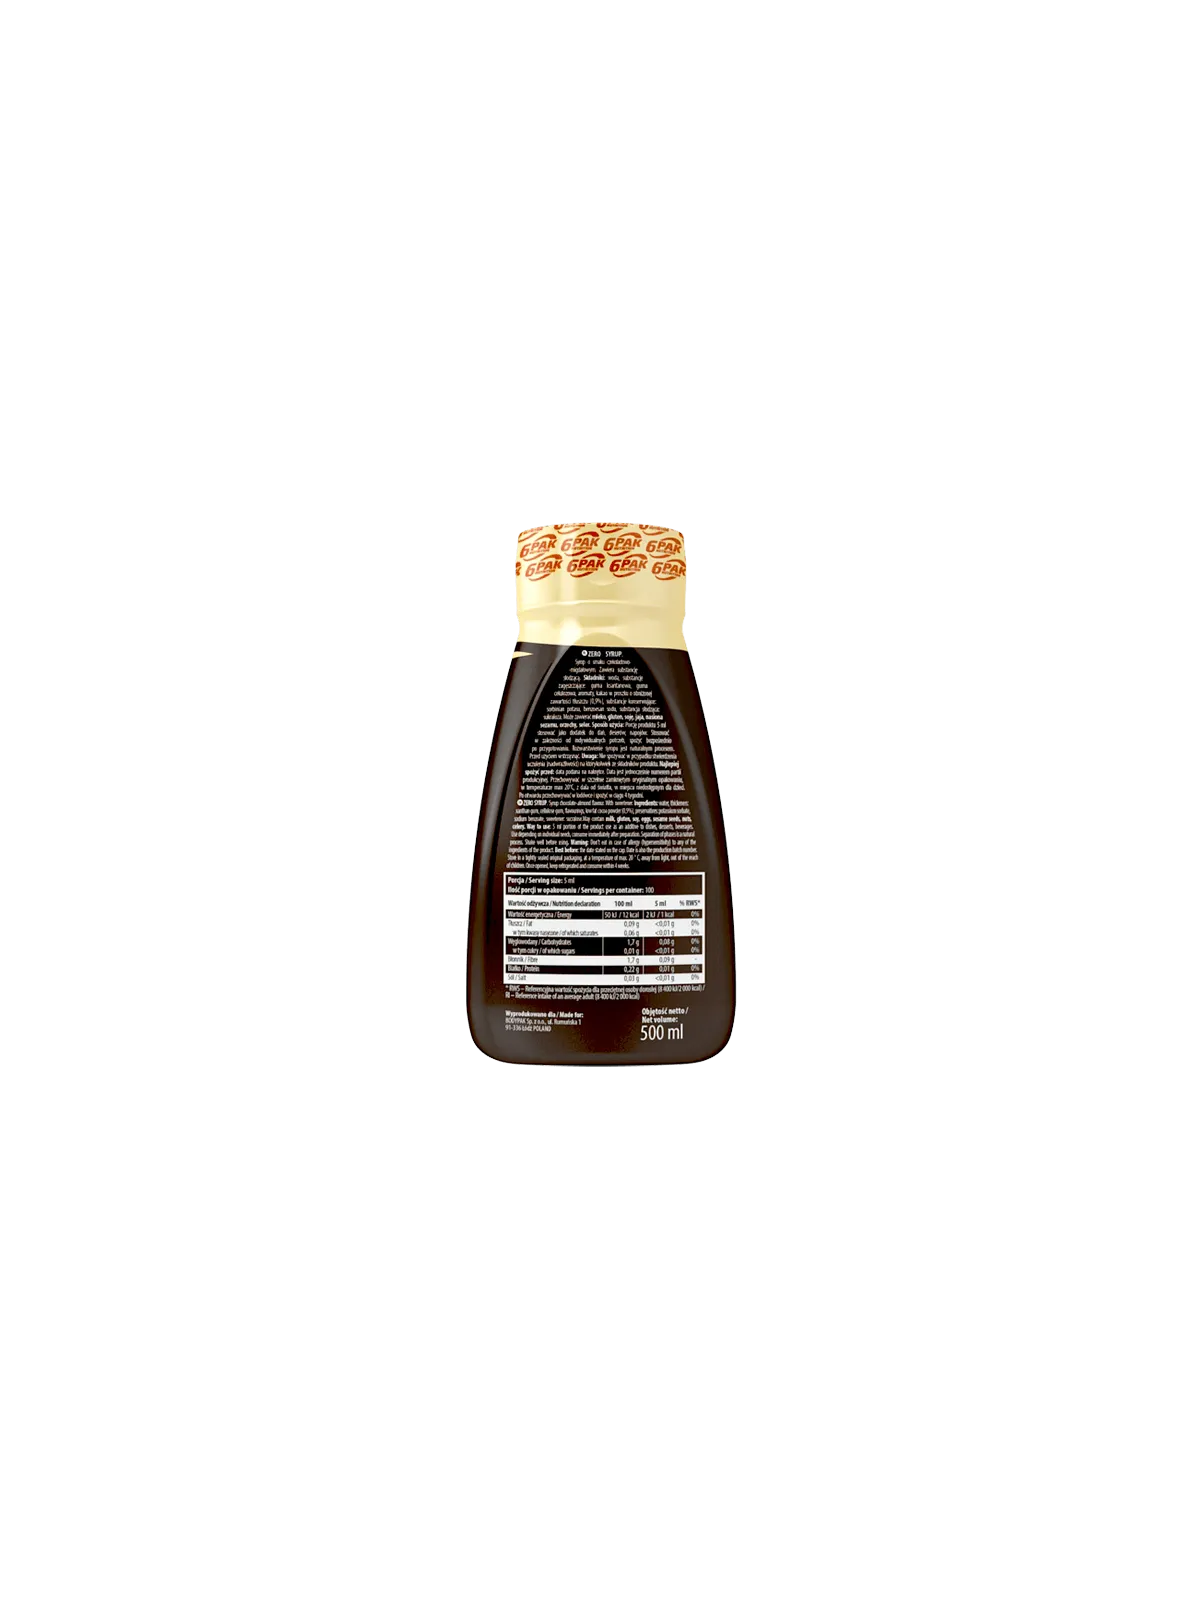 Syrup ZERO Chocolate-Almond - 500ml